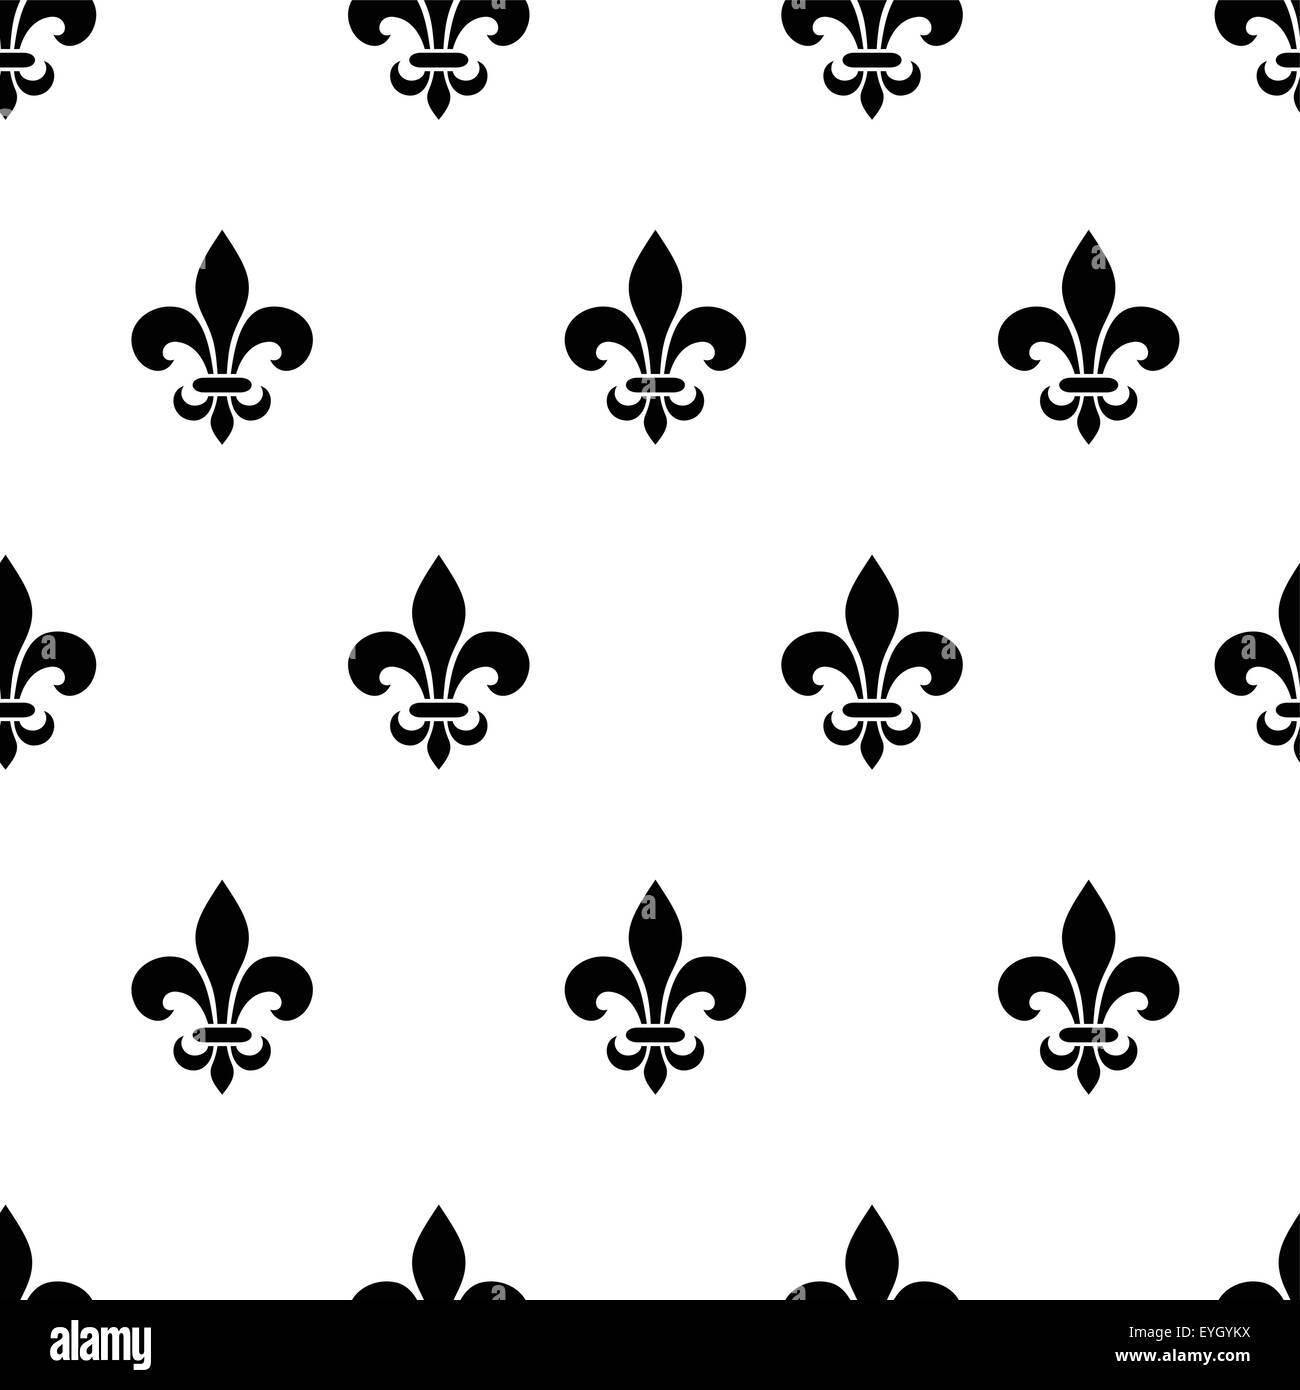 Fleur-de-lis black and white seamless pattern. Vector illustration. Stock Vector